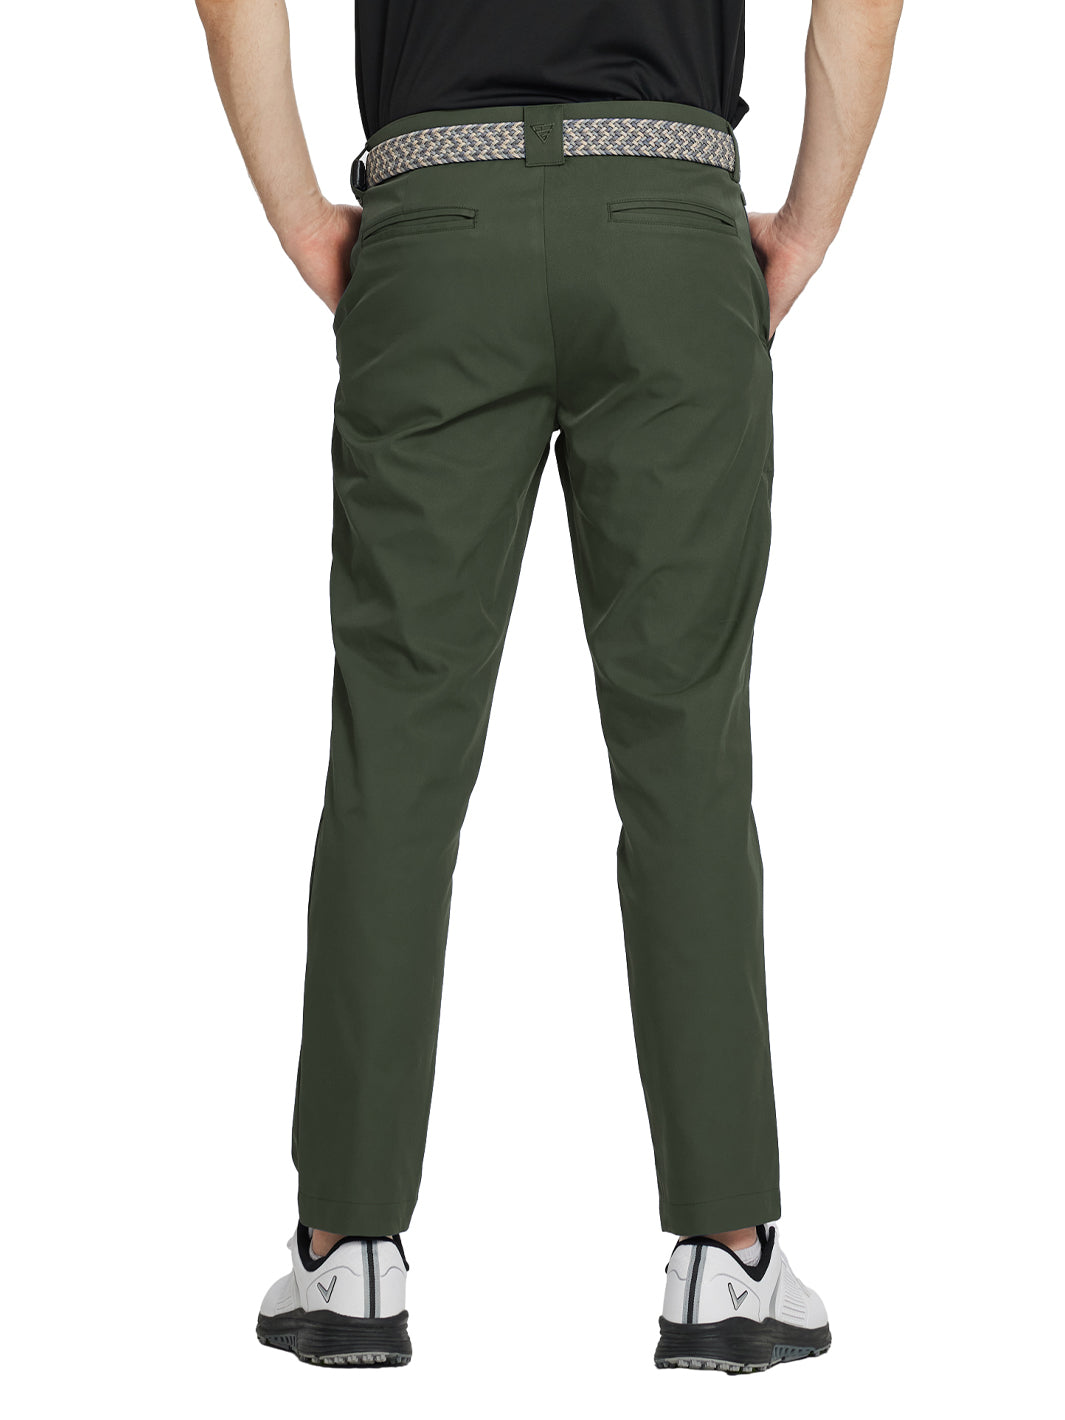 Men's Performance Golf Pants-Olive Green